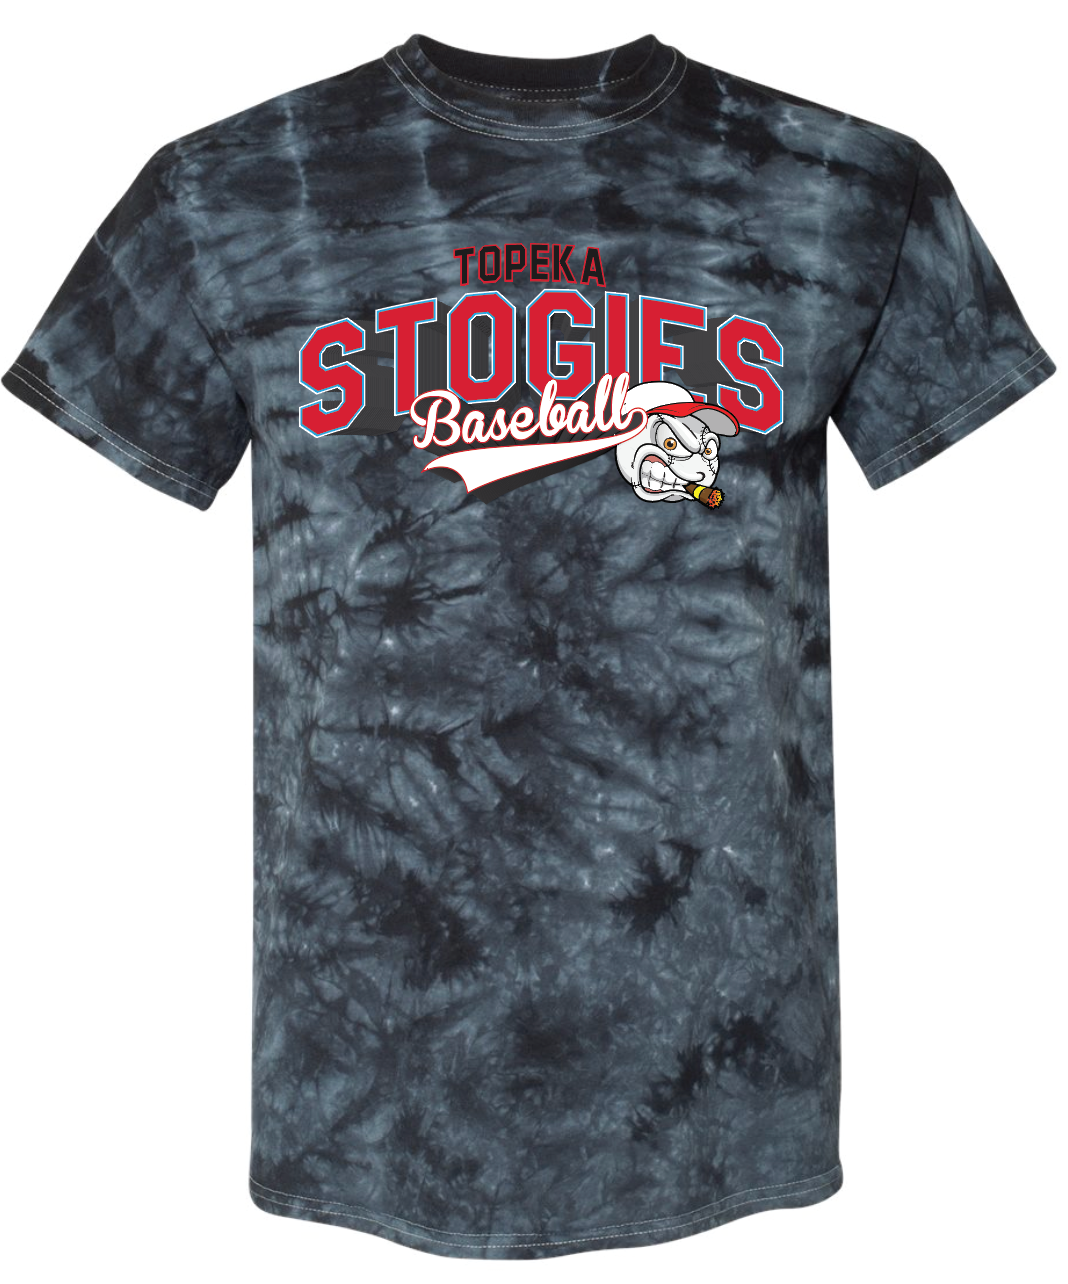 Stogies Baseball Cyclone Tie Dye T-shirt